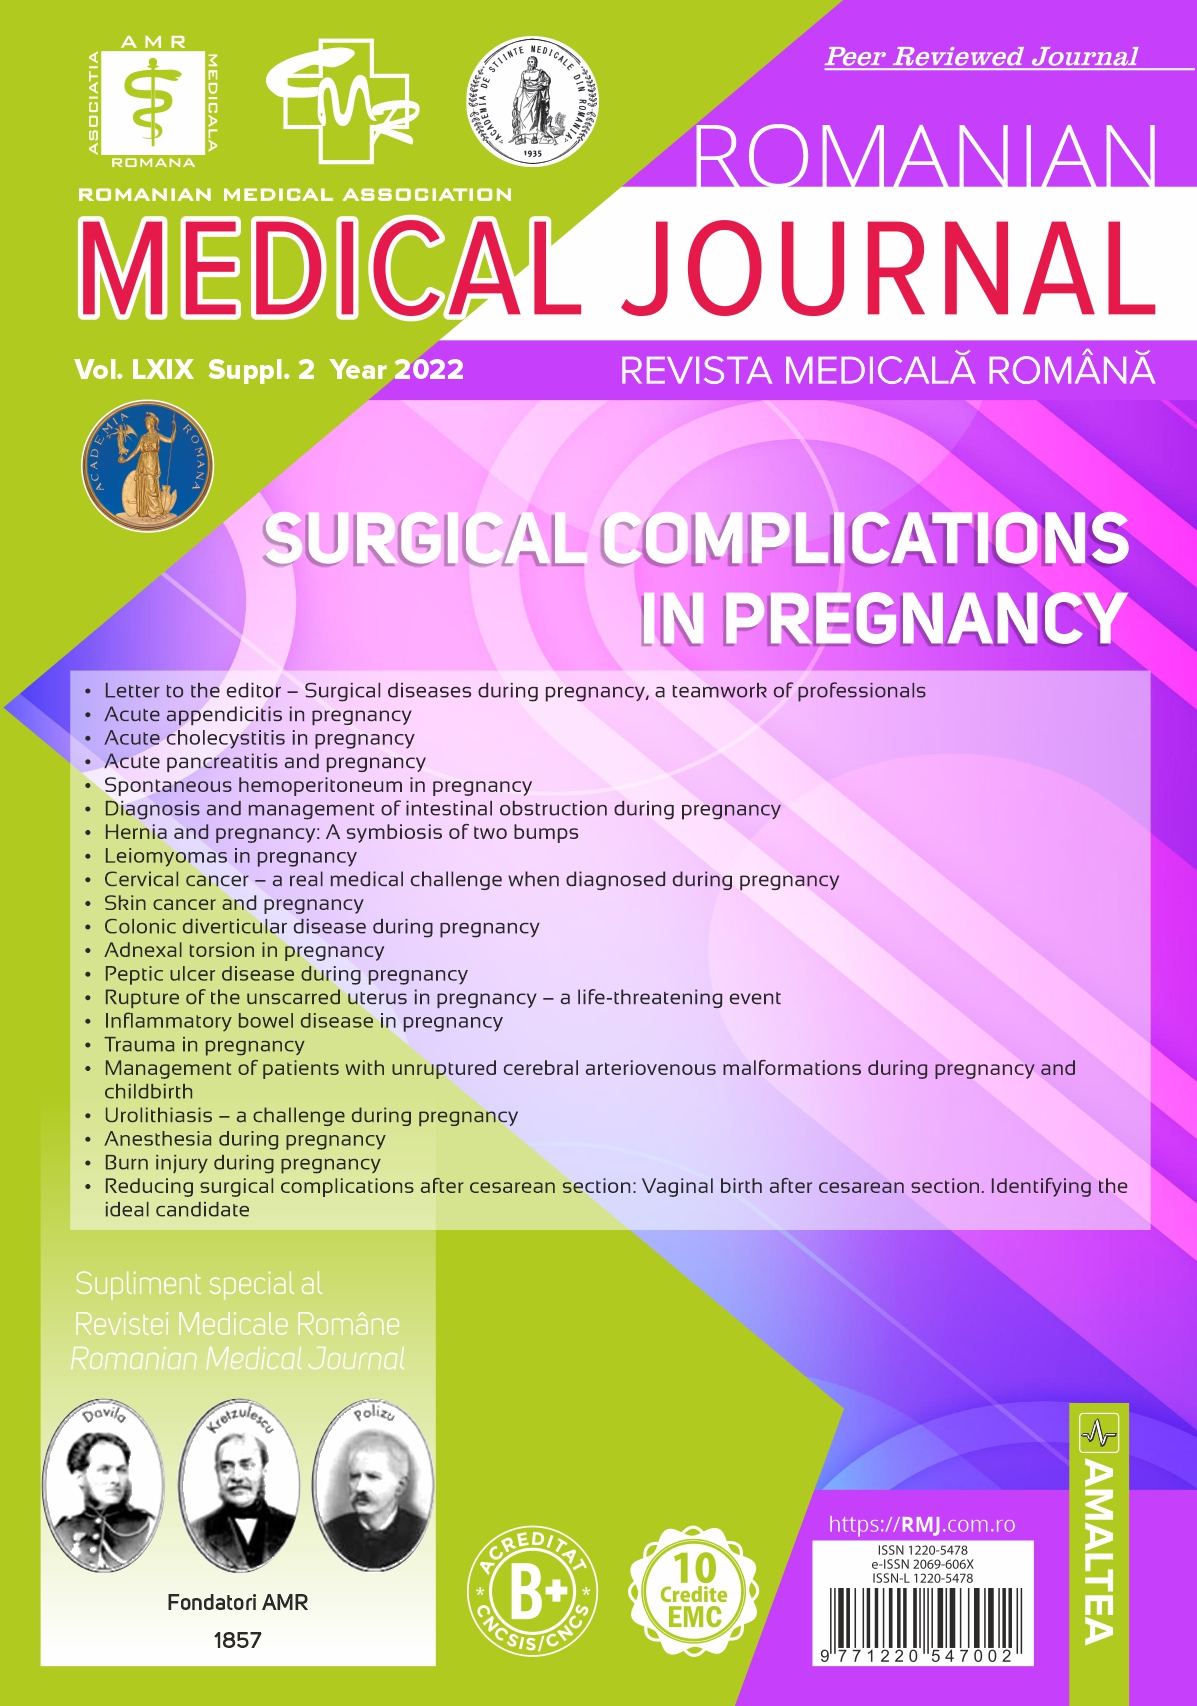 Romanian Medical Journal - REVISTA MEDICALA ROMANA, Vol. LXIX, Suppl. 2, Year 2022